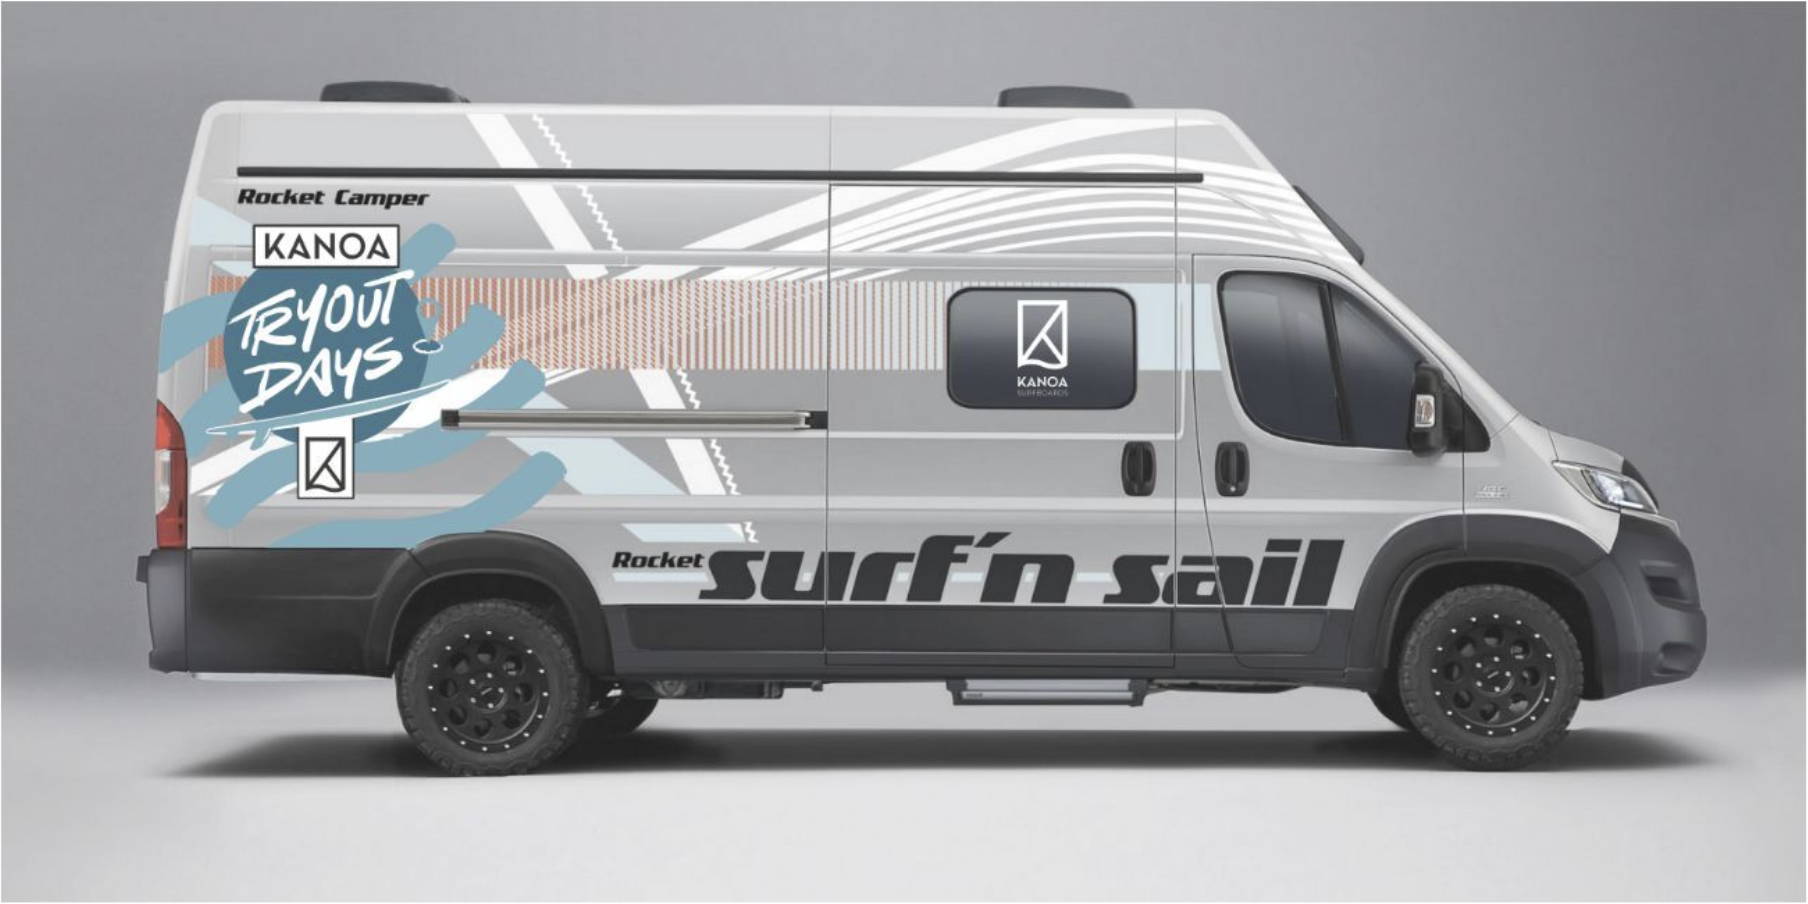 Rocket Camper x KANOA - our Van for the River Test Tour